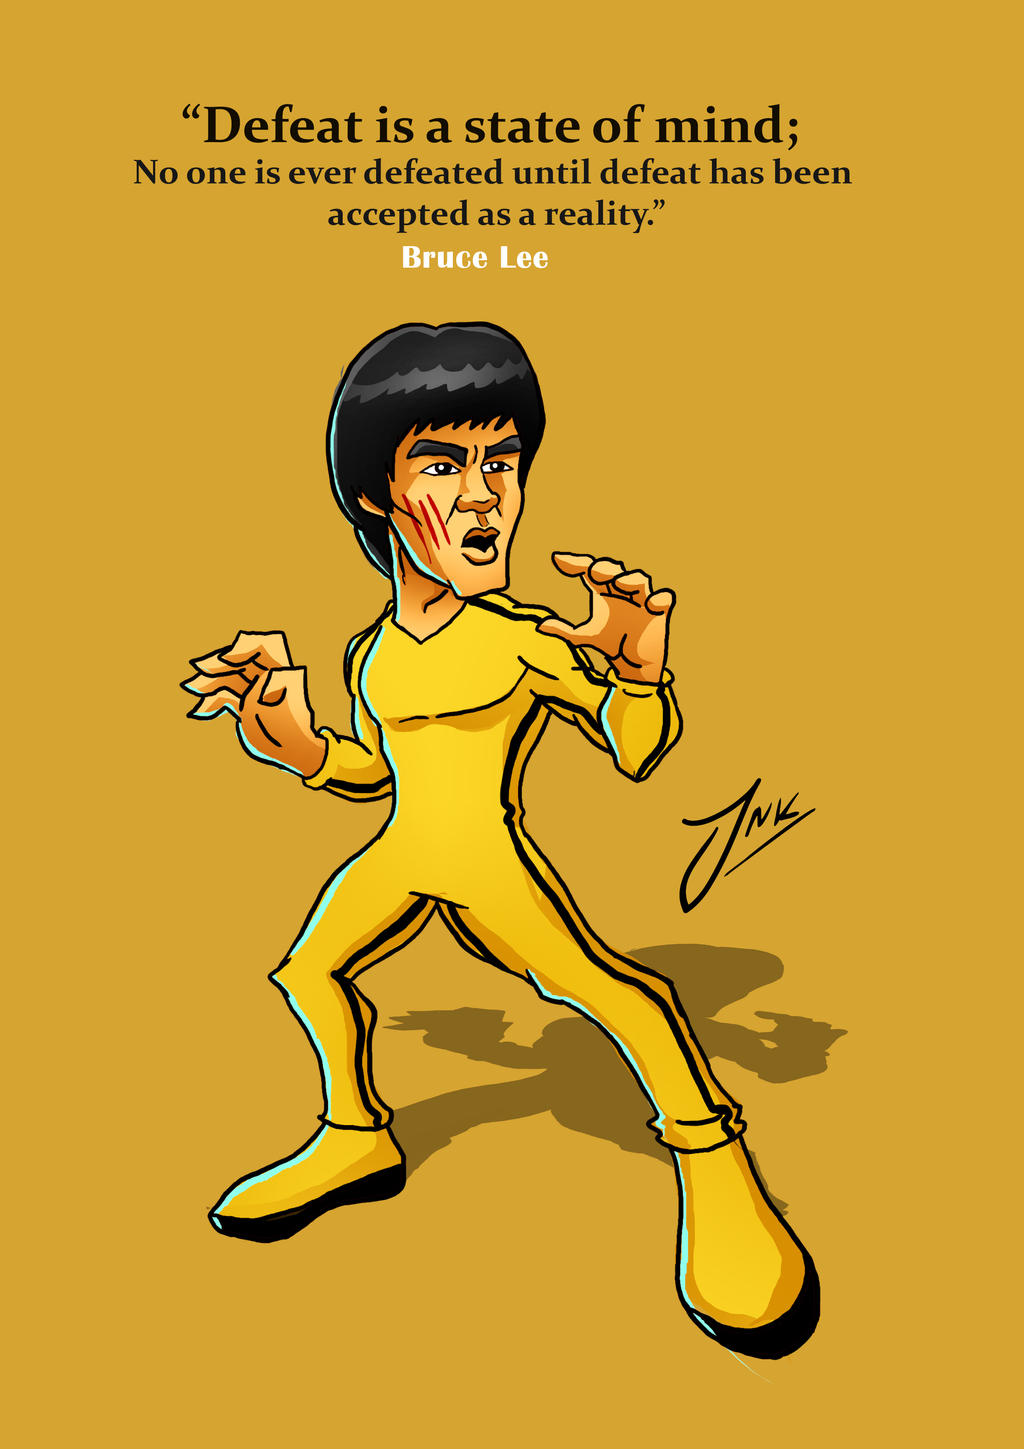 Bruce Lee by patient143 on DeviantArt